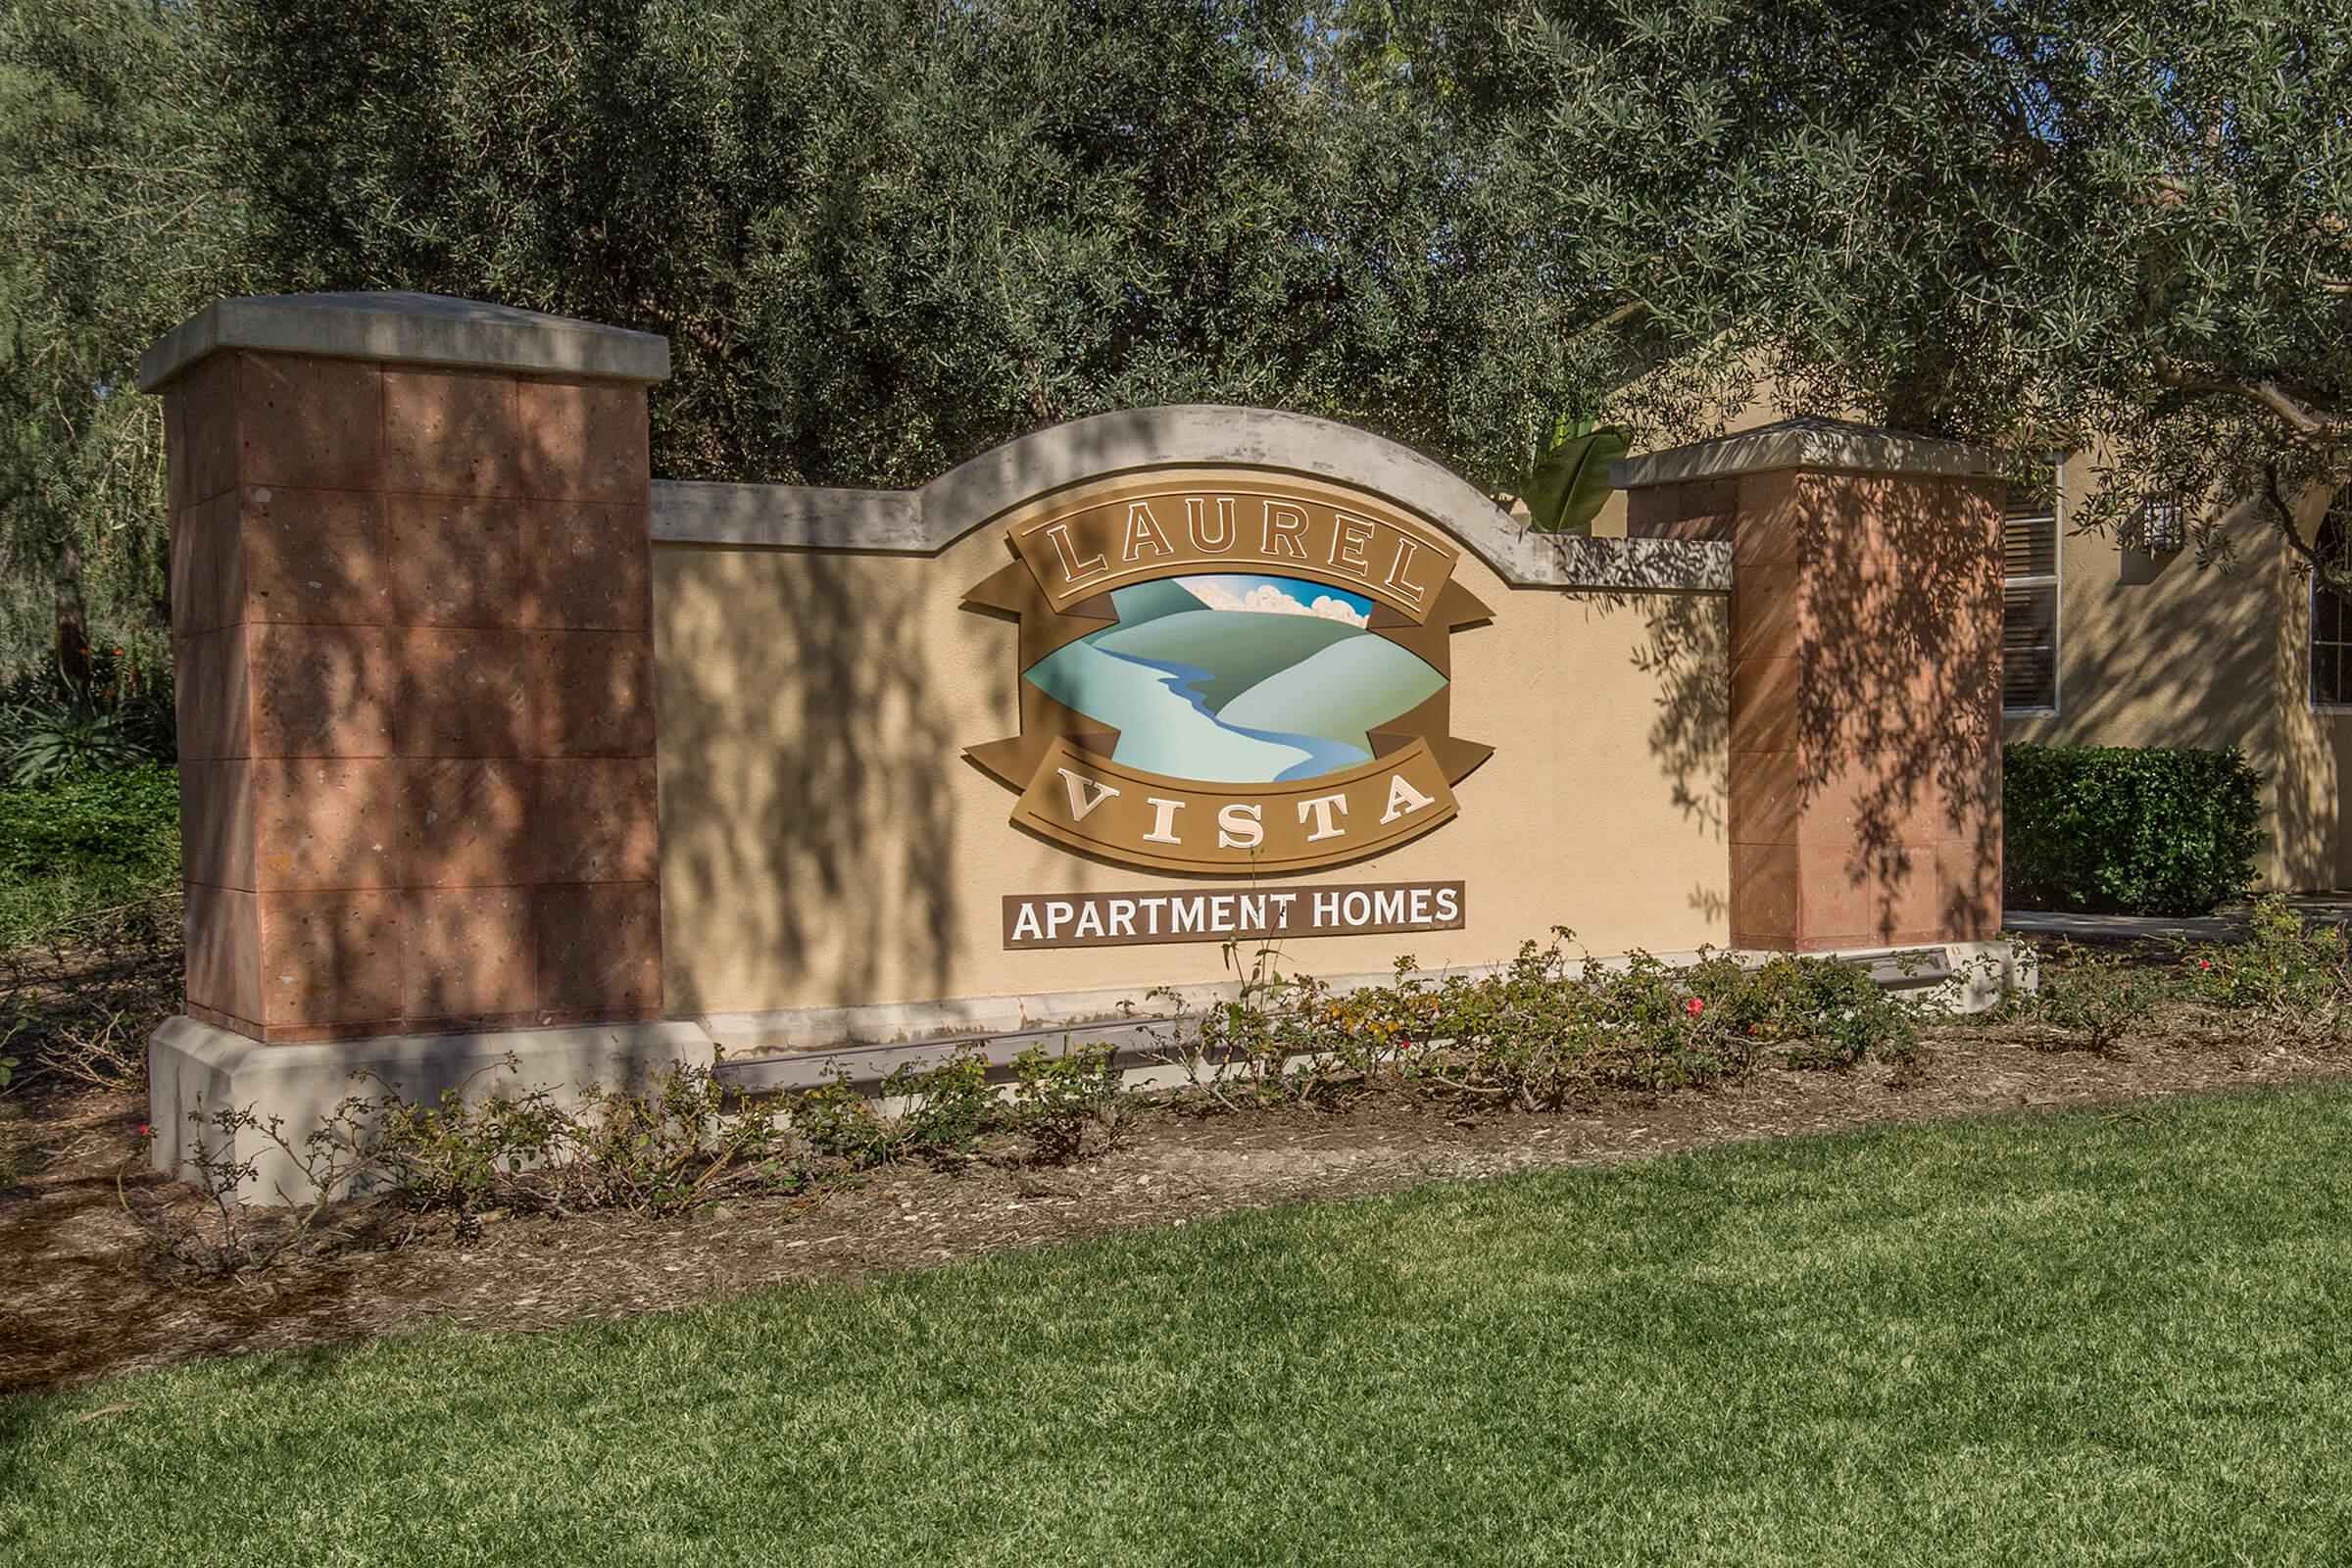 Laurel Vista Apartment Homes monument sign